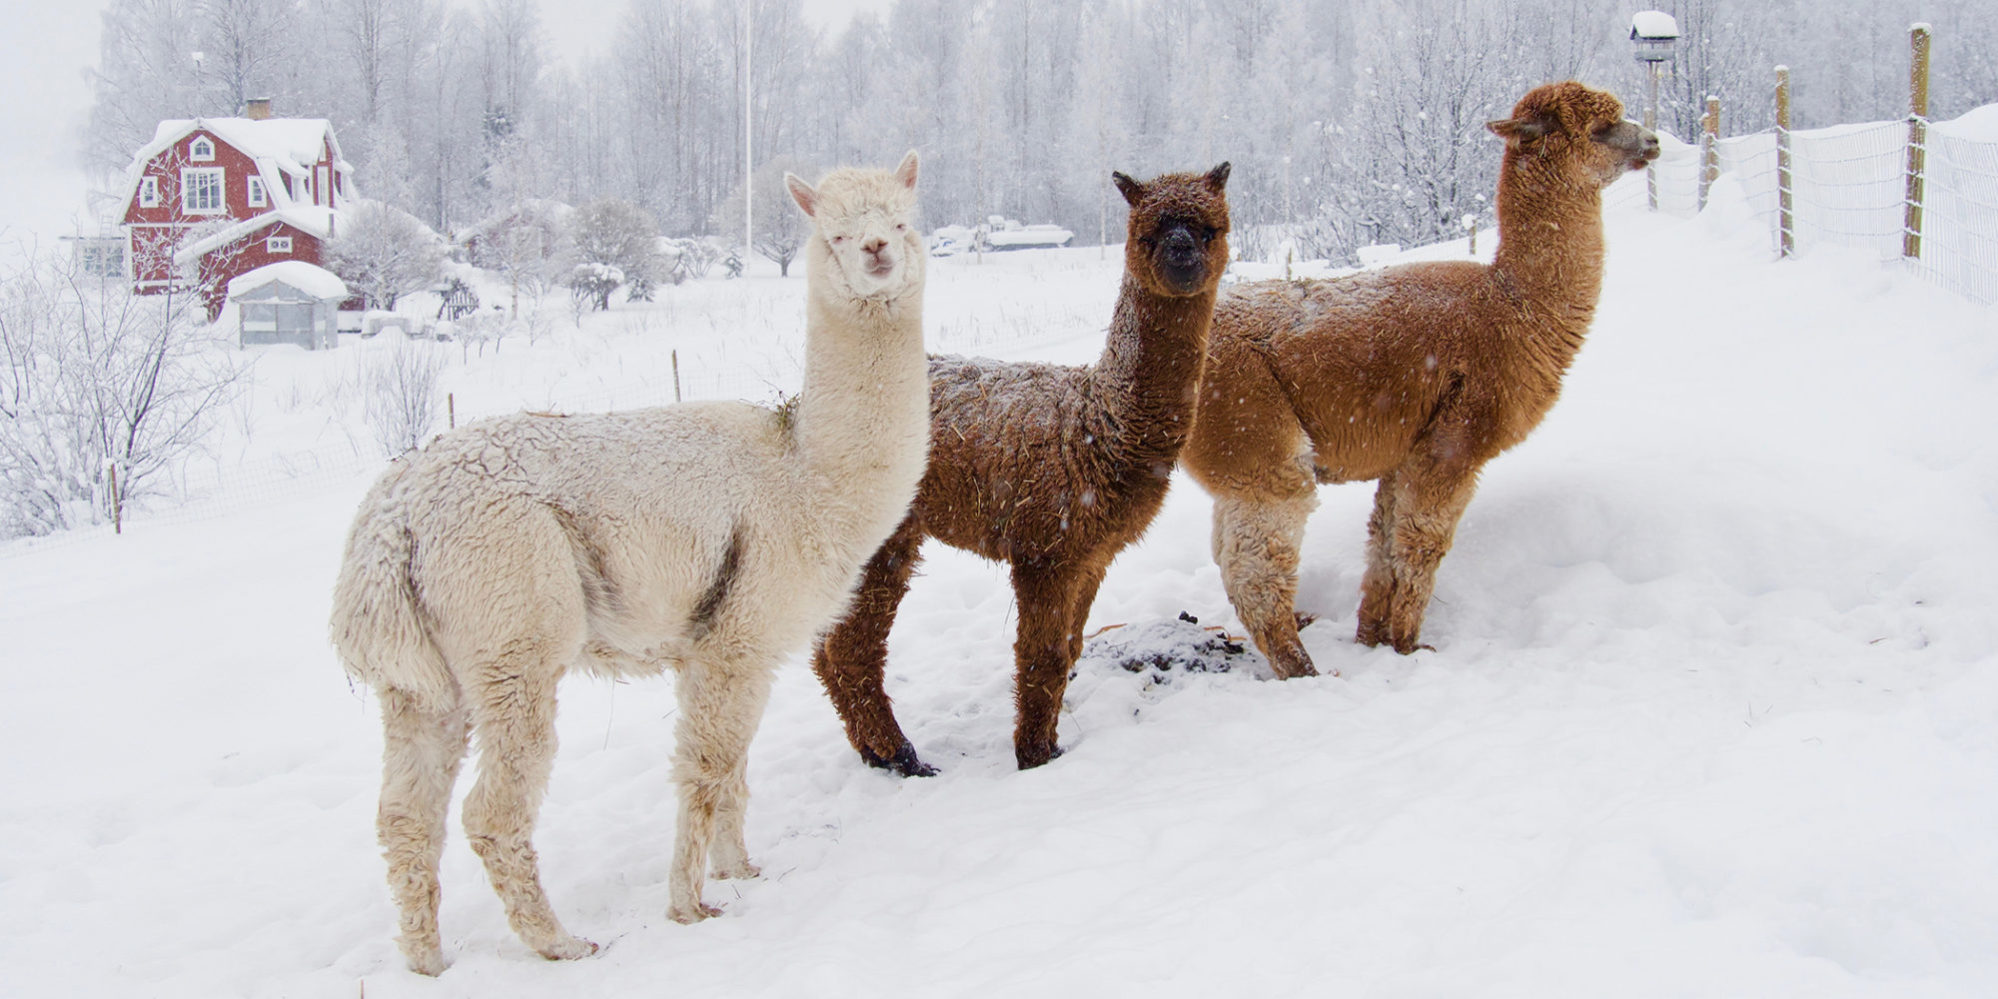 Three alpacas in the snow.